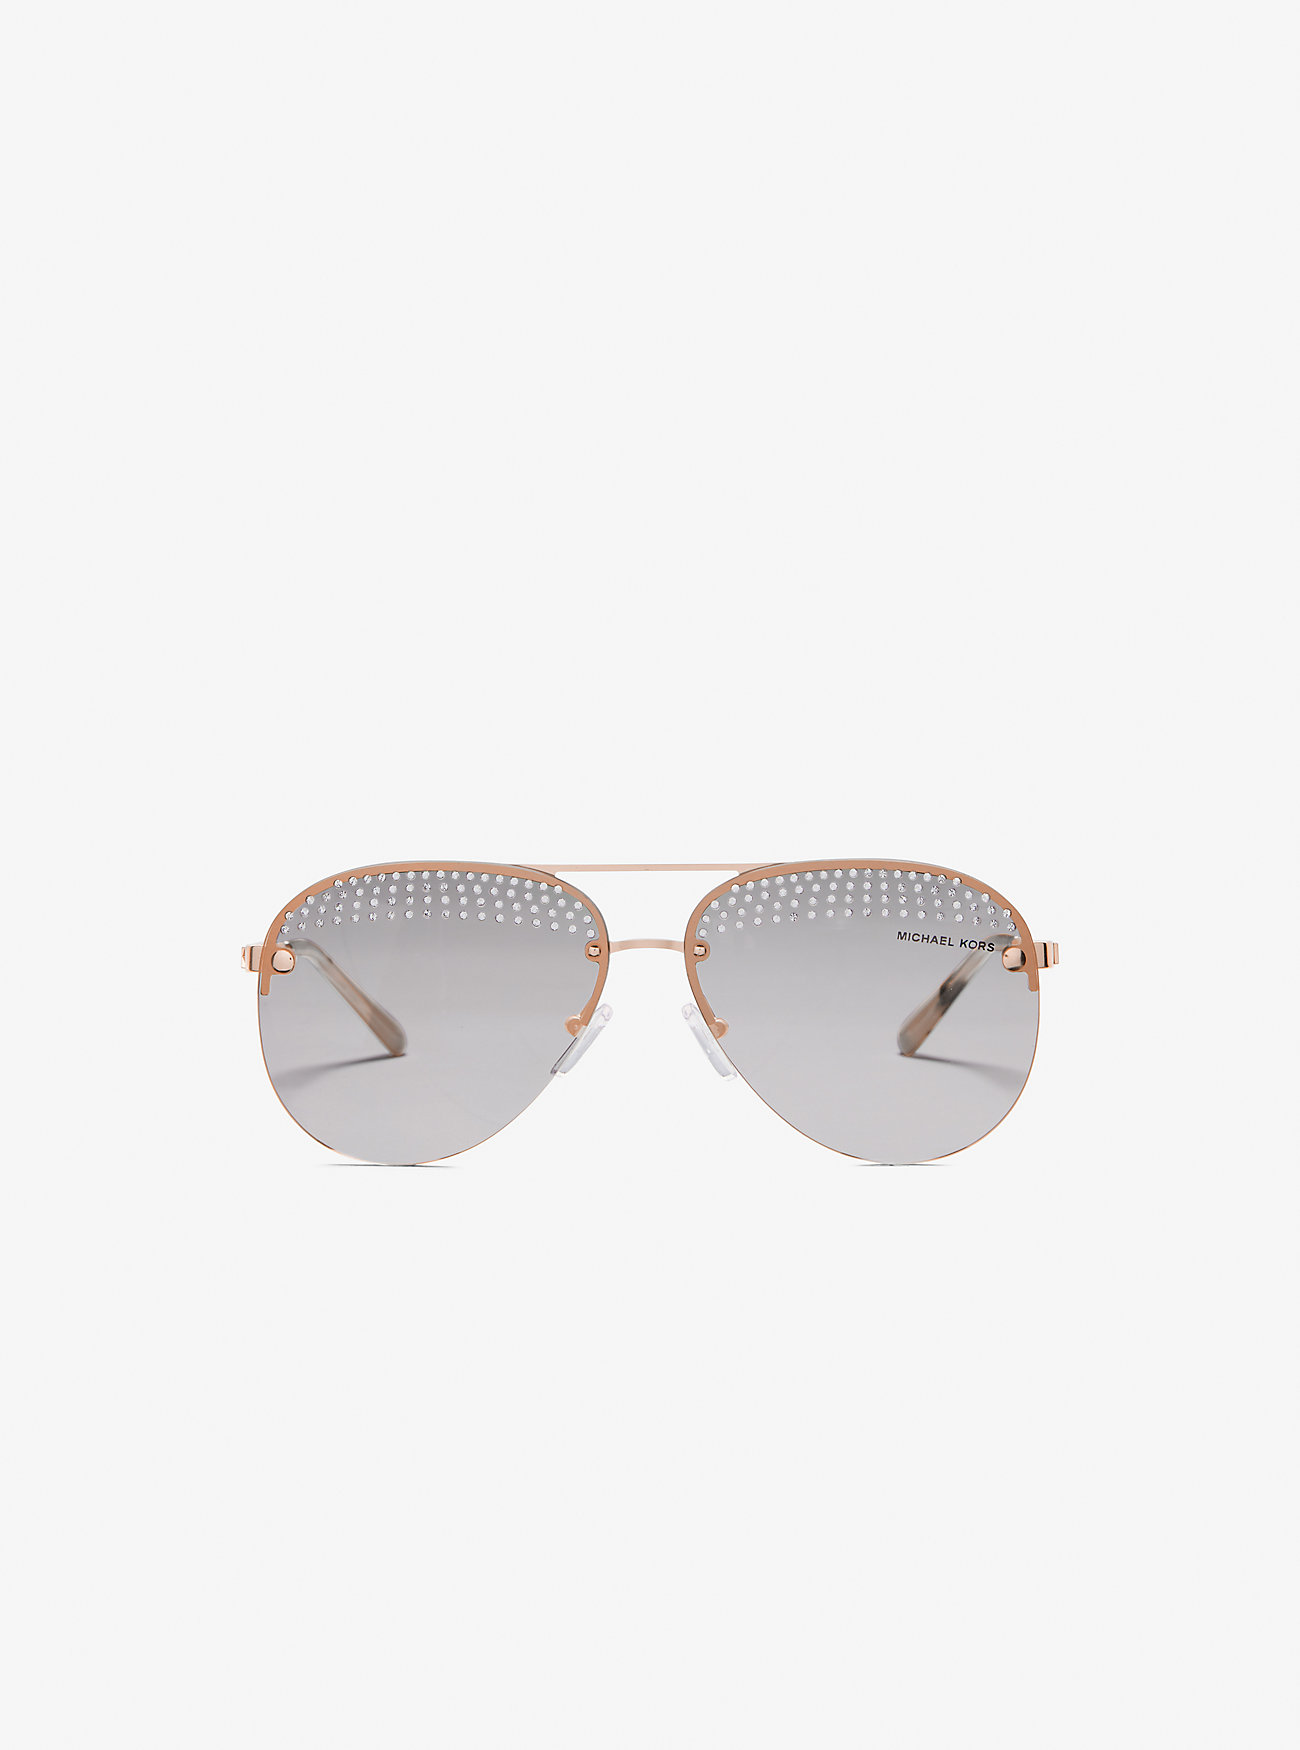 Michaelkors East Side Sunglasses